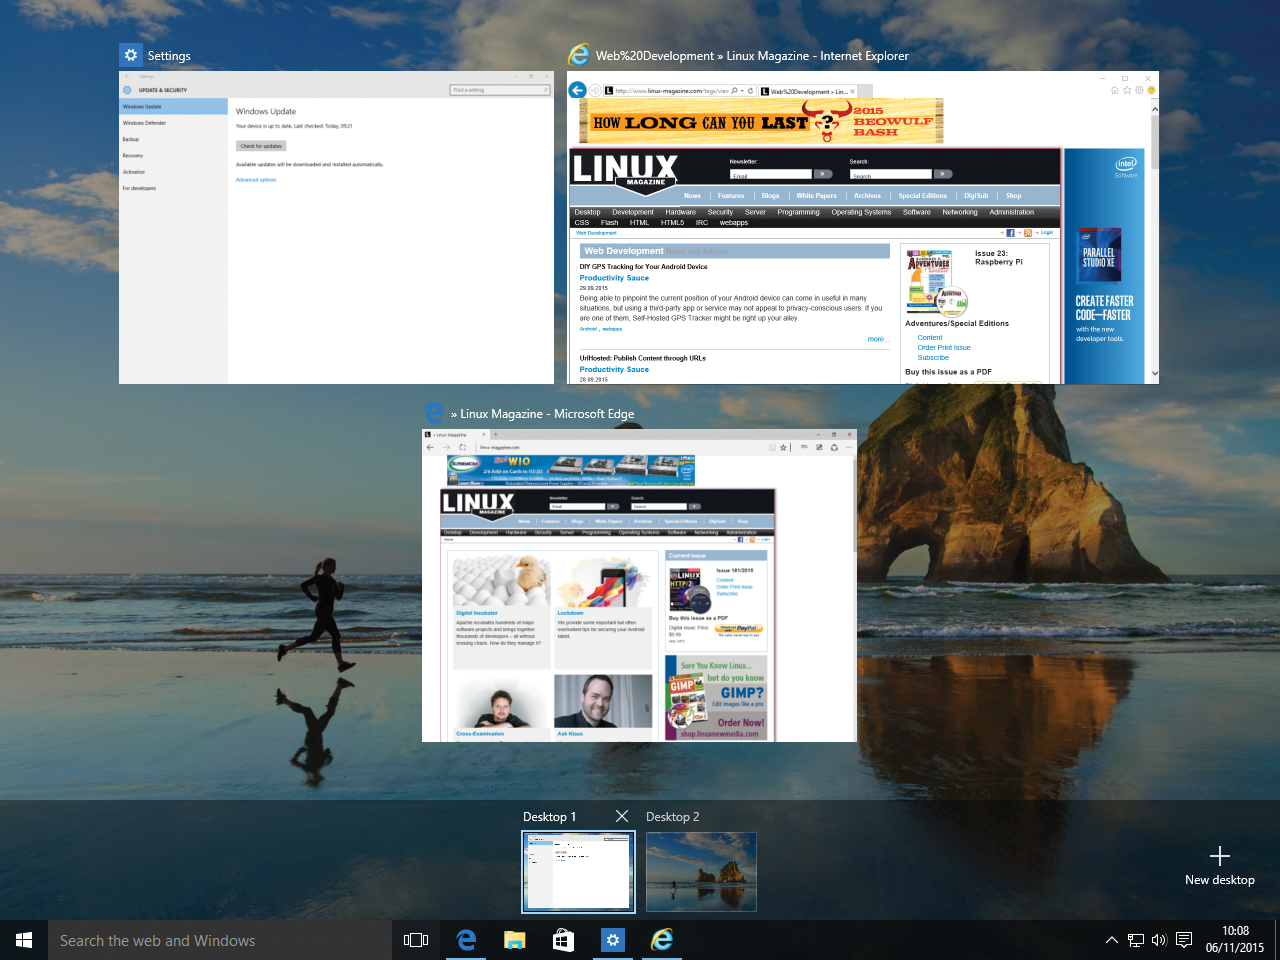 Users can set up multiple desktops in Windows 10. 